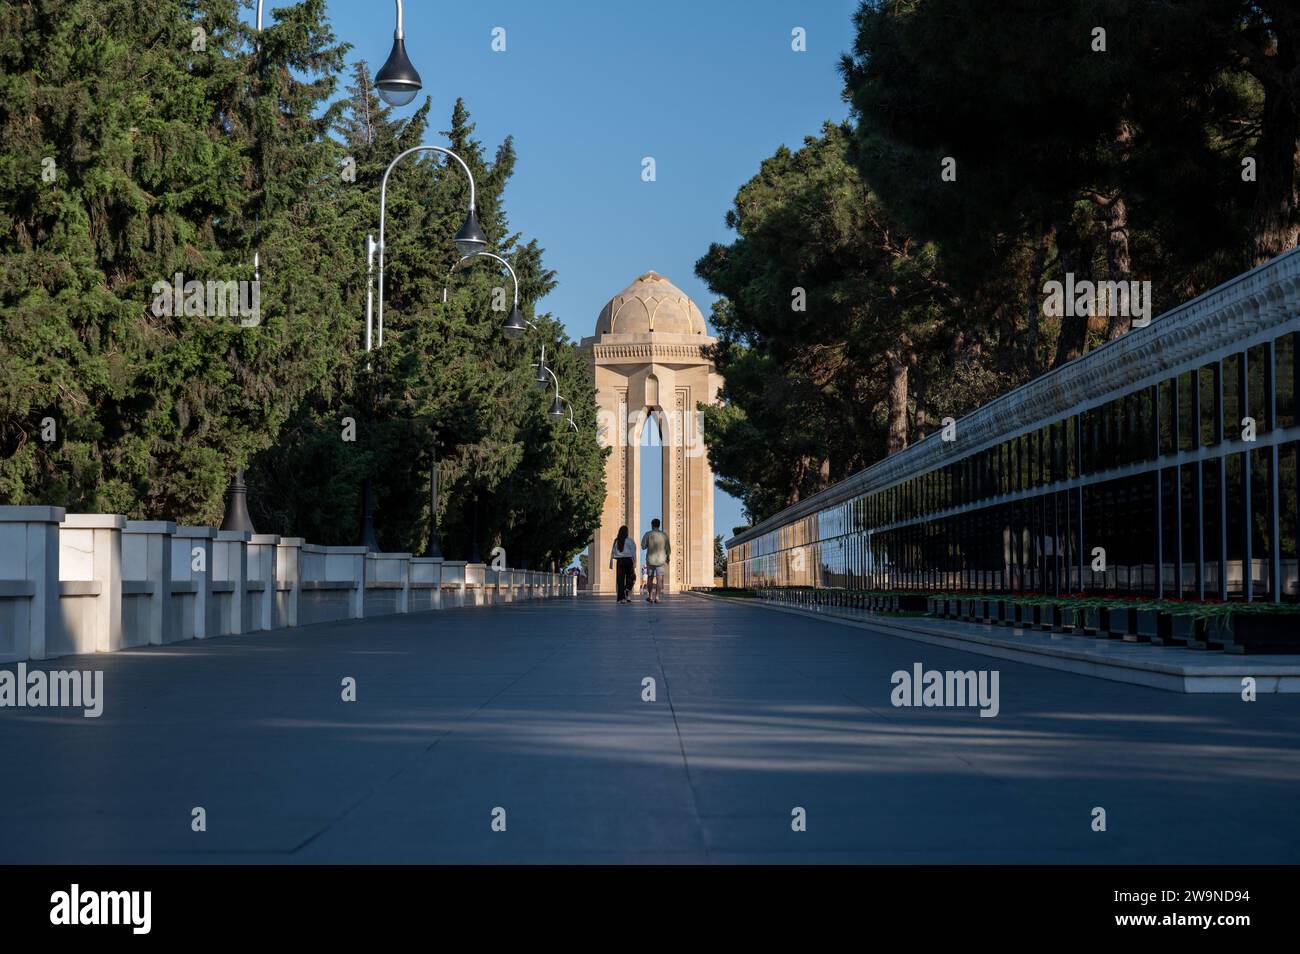 Shahidlar Monument or Martyr's Monument located on Martyr's Lane in Highland Park overlooking Baku, capital city of Azerbaijan Stock Photo